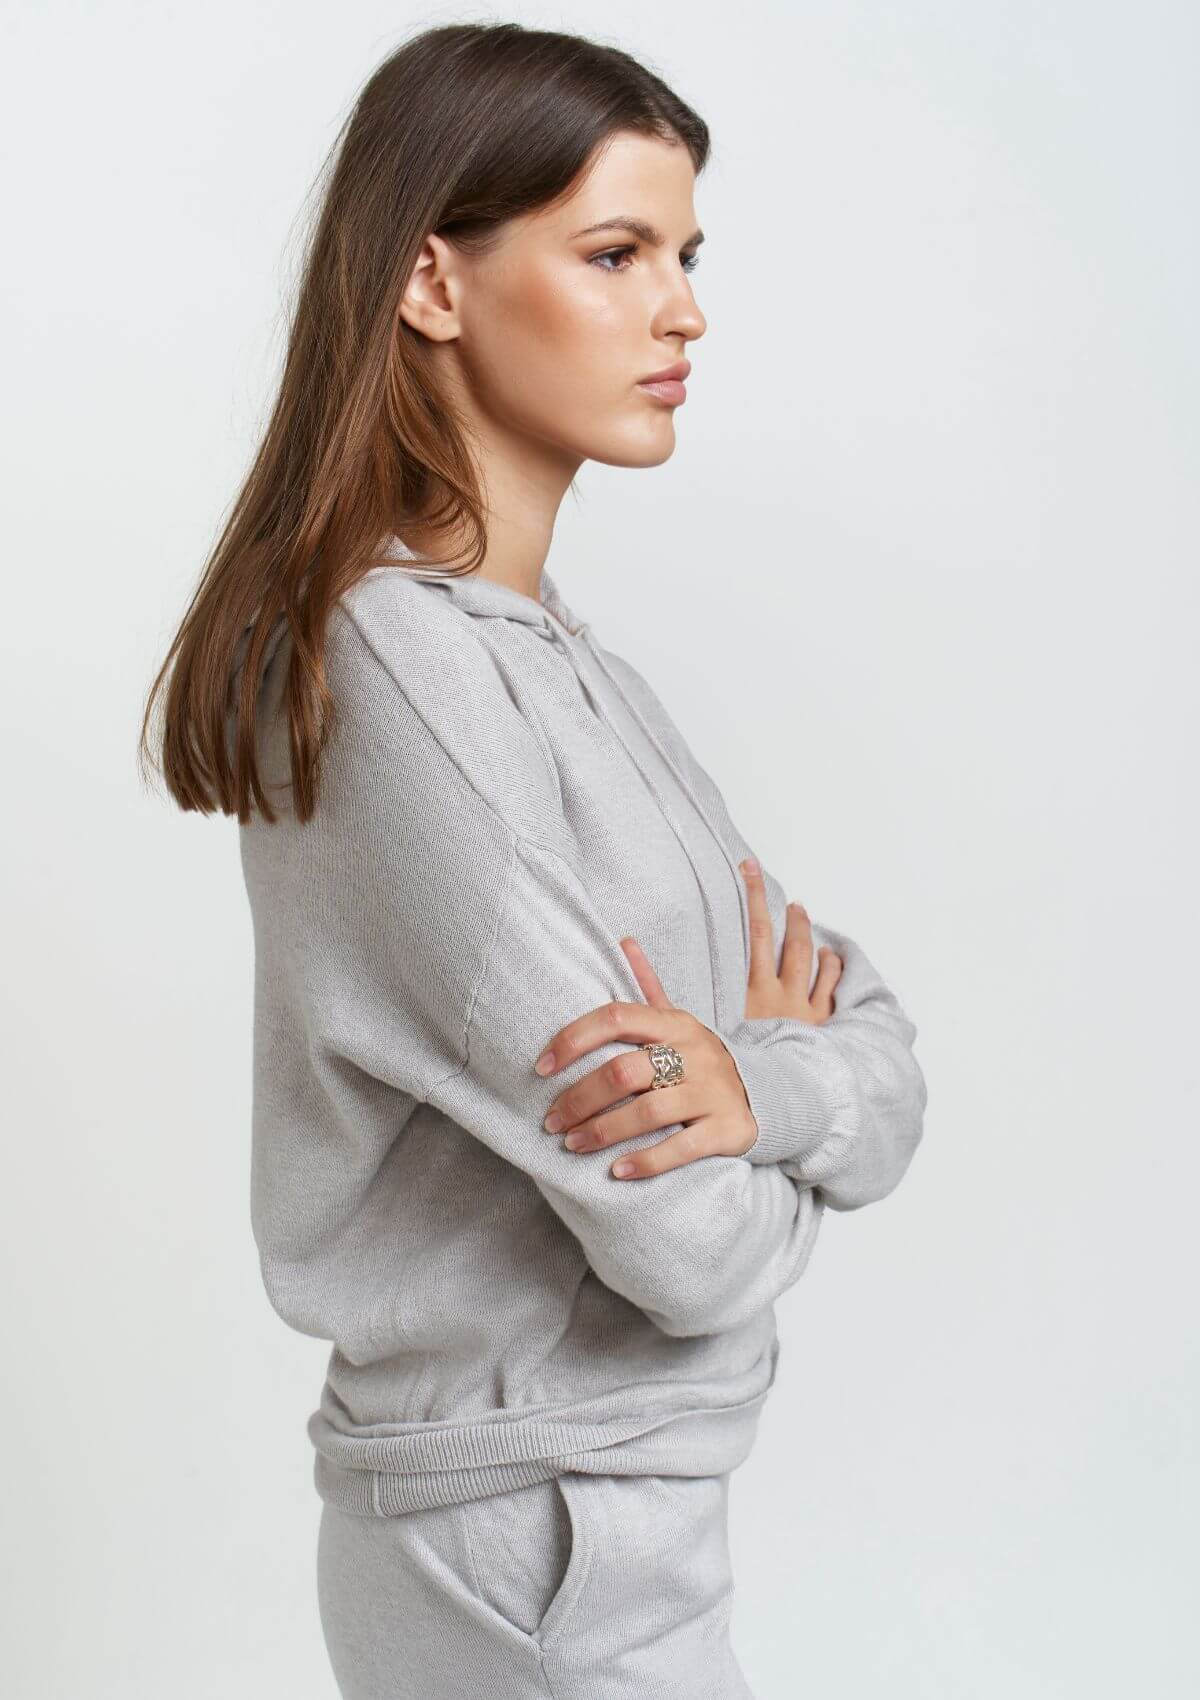 elegant-hodie-knitted-cashmere-sweatshirt-grey-Silk & tonic